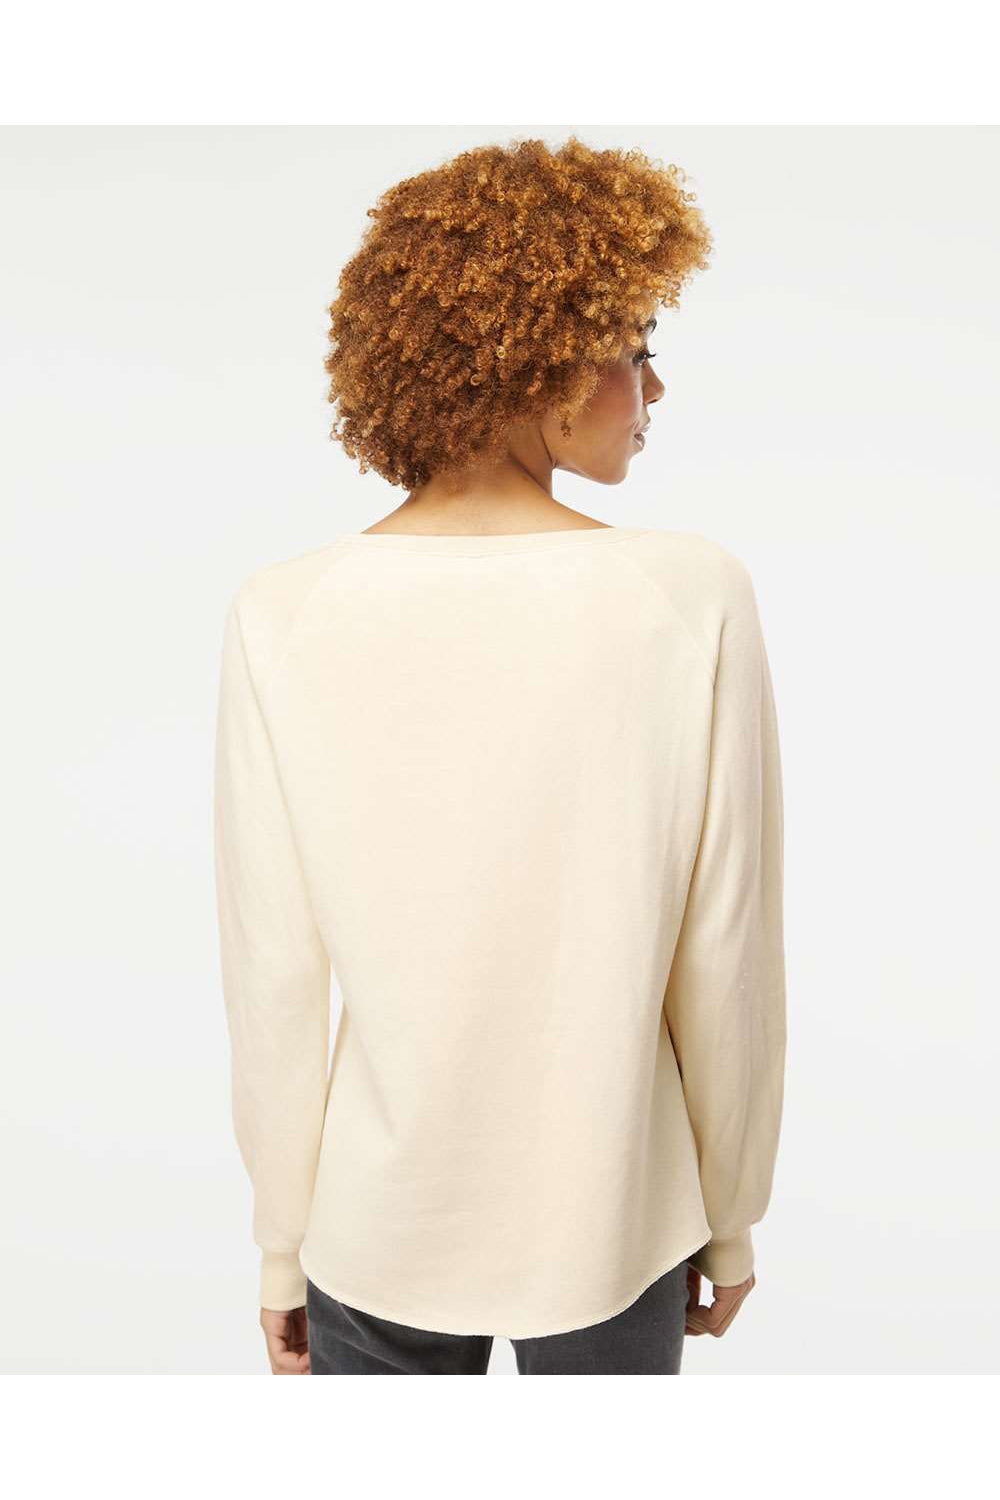 Independent Trading Co. PRM2000 Womens California Wave Wash Crewneck Sweatshirt Bone Model Back